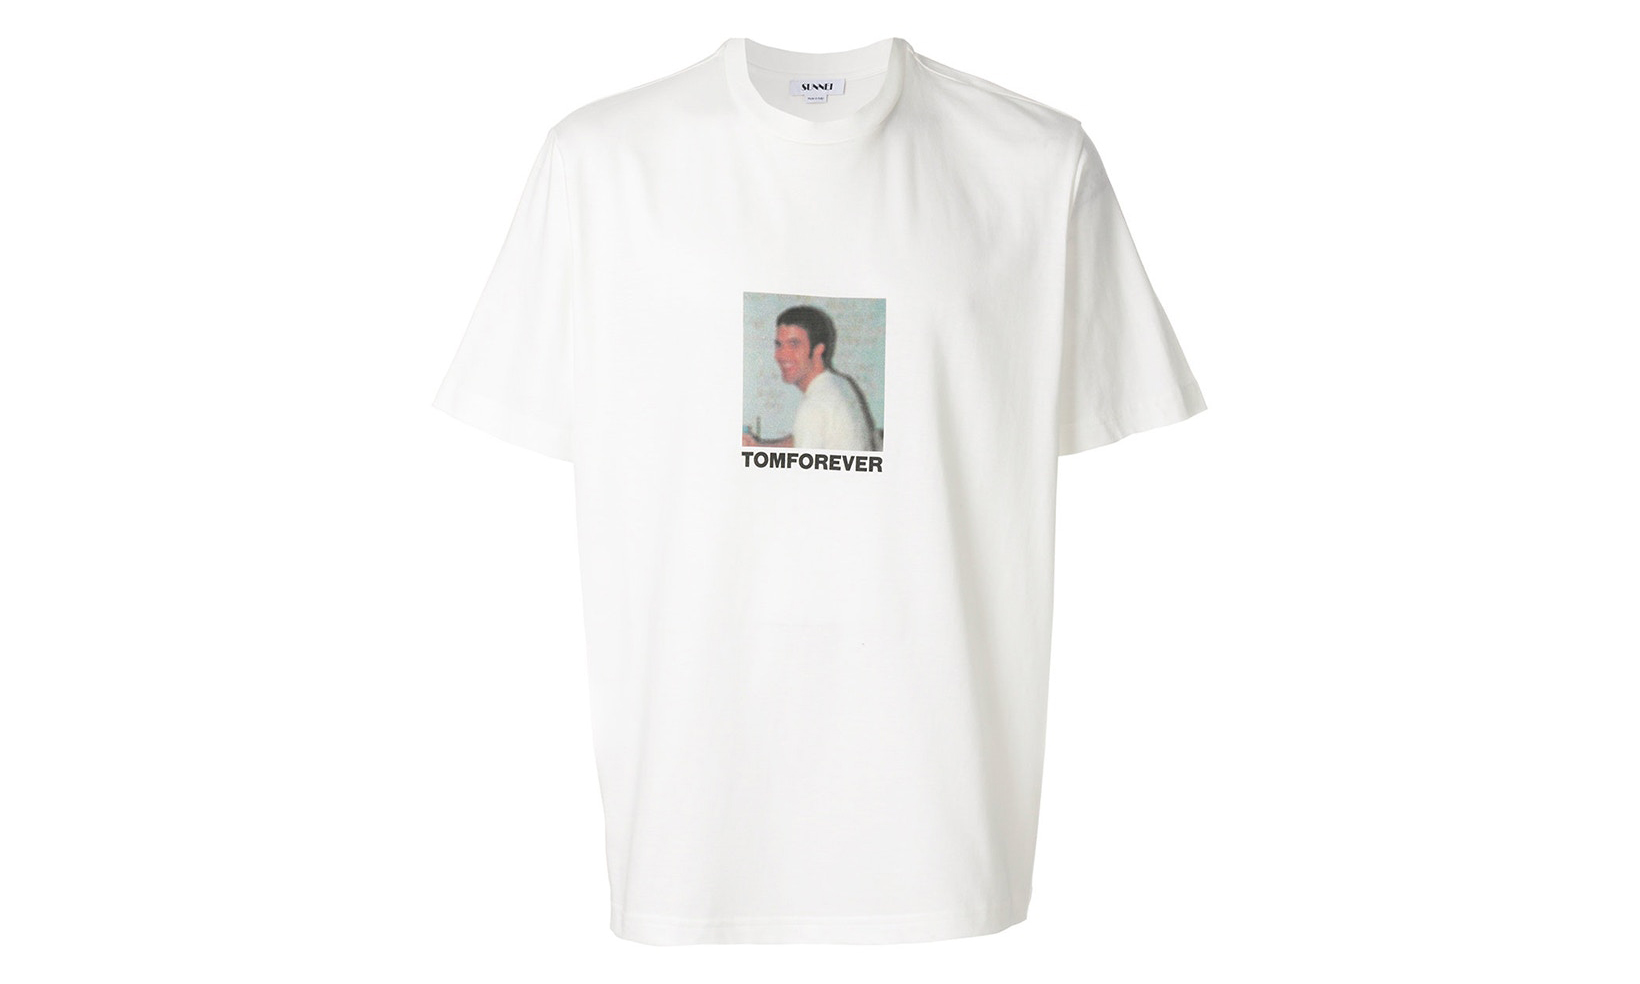 SUNNEI 发布 T-Shirt 纪念 MySpace 创始人 Tom